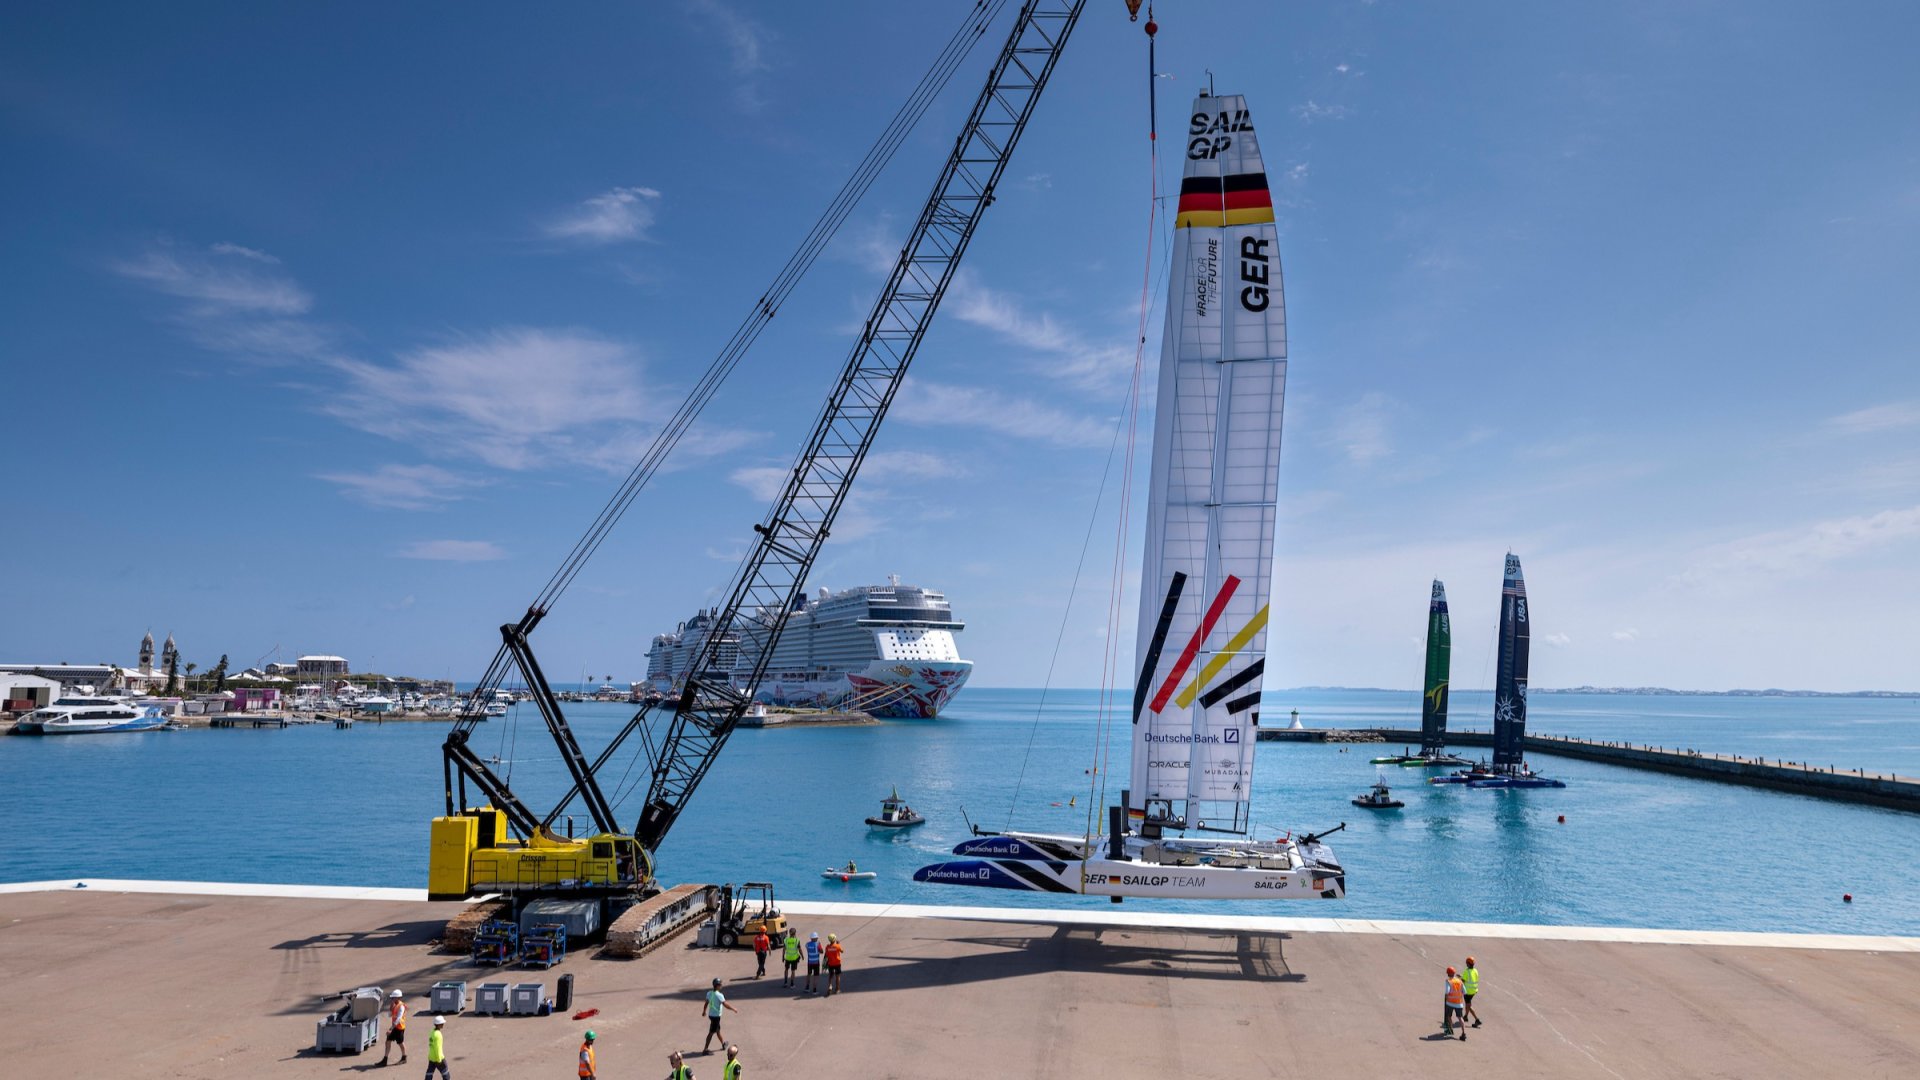 PHOTOS: SailGP arrives in Bermuda 